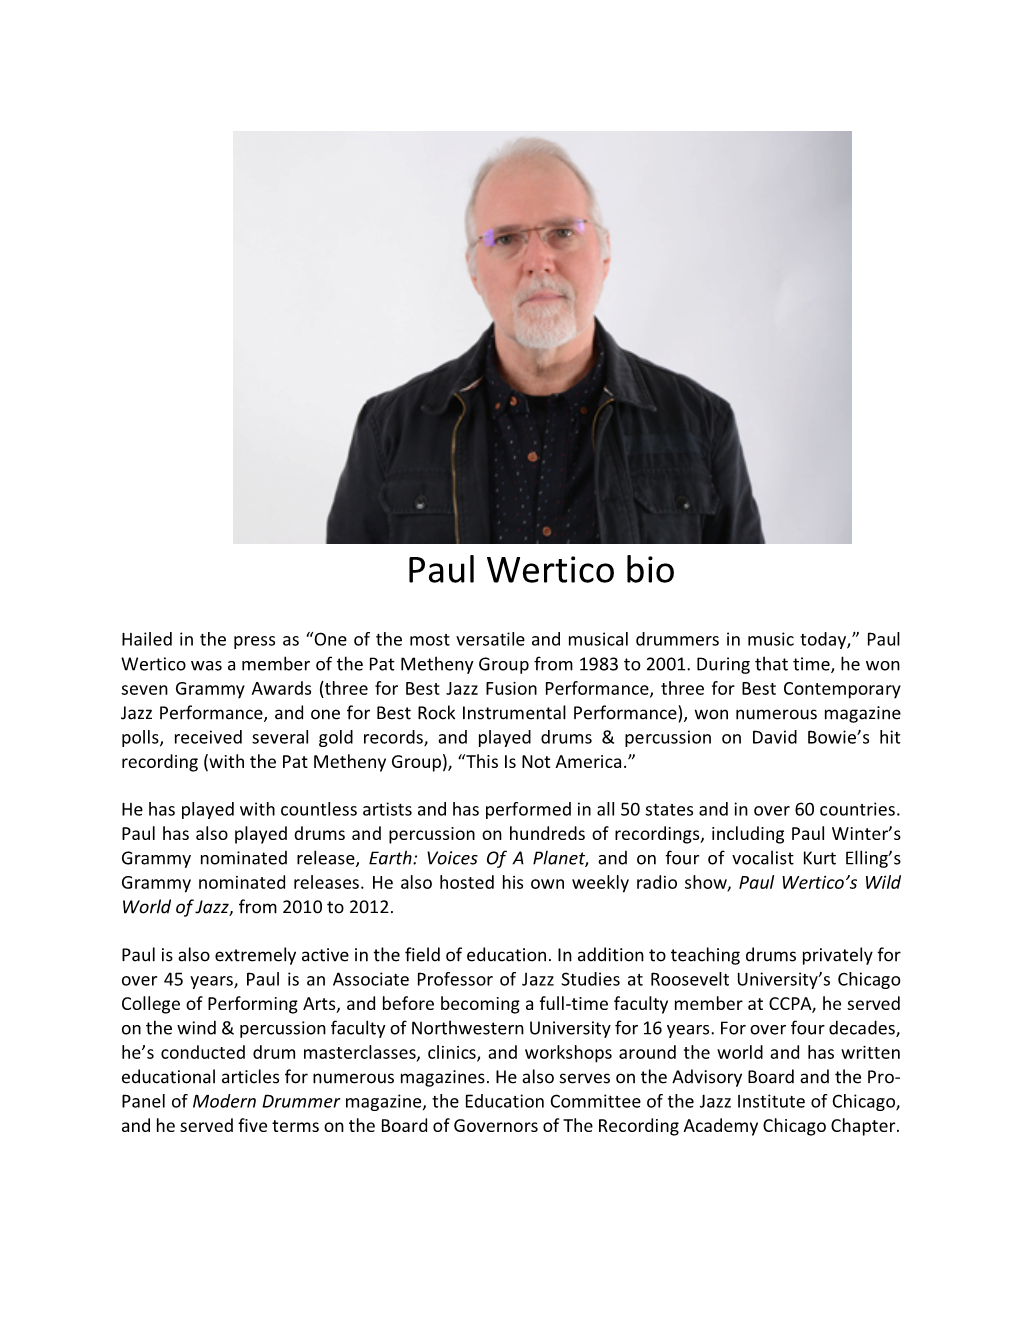 Paul Wertico Bio